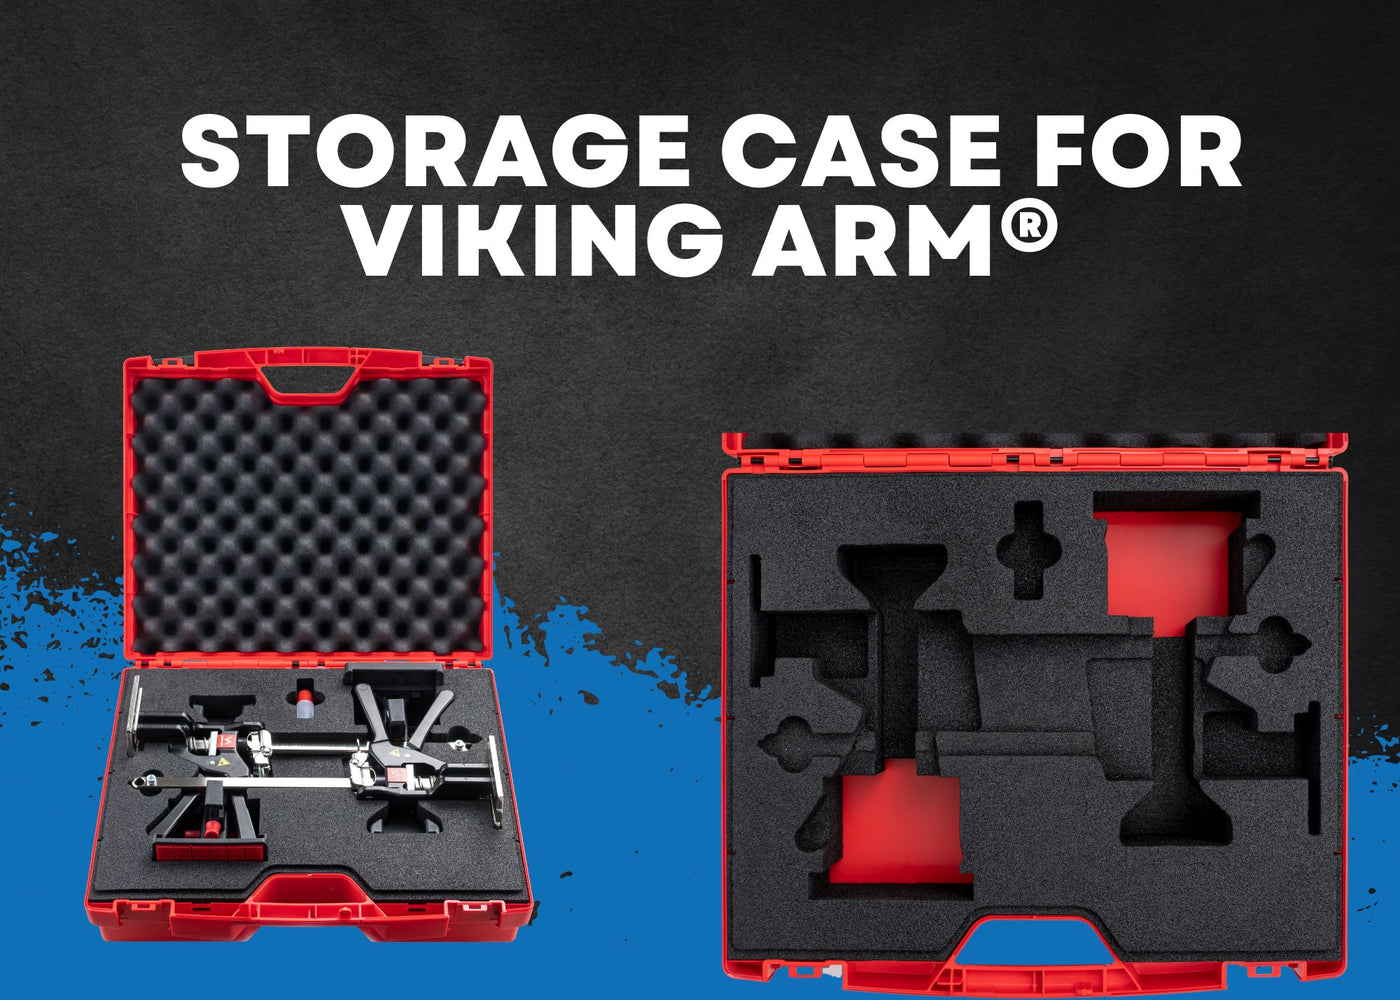 Viking Arm – Creative Tool Company